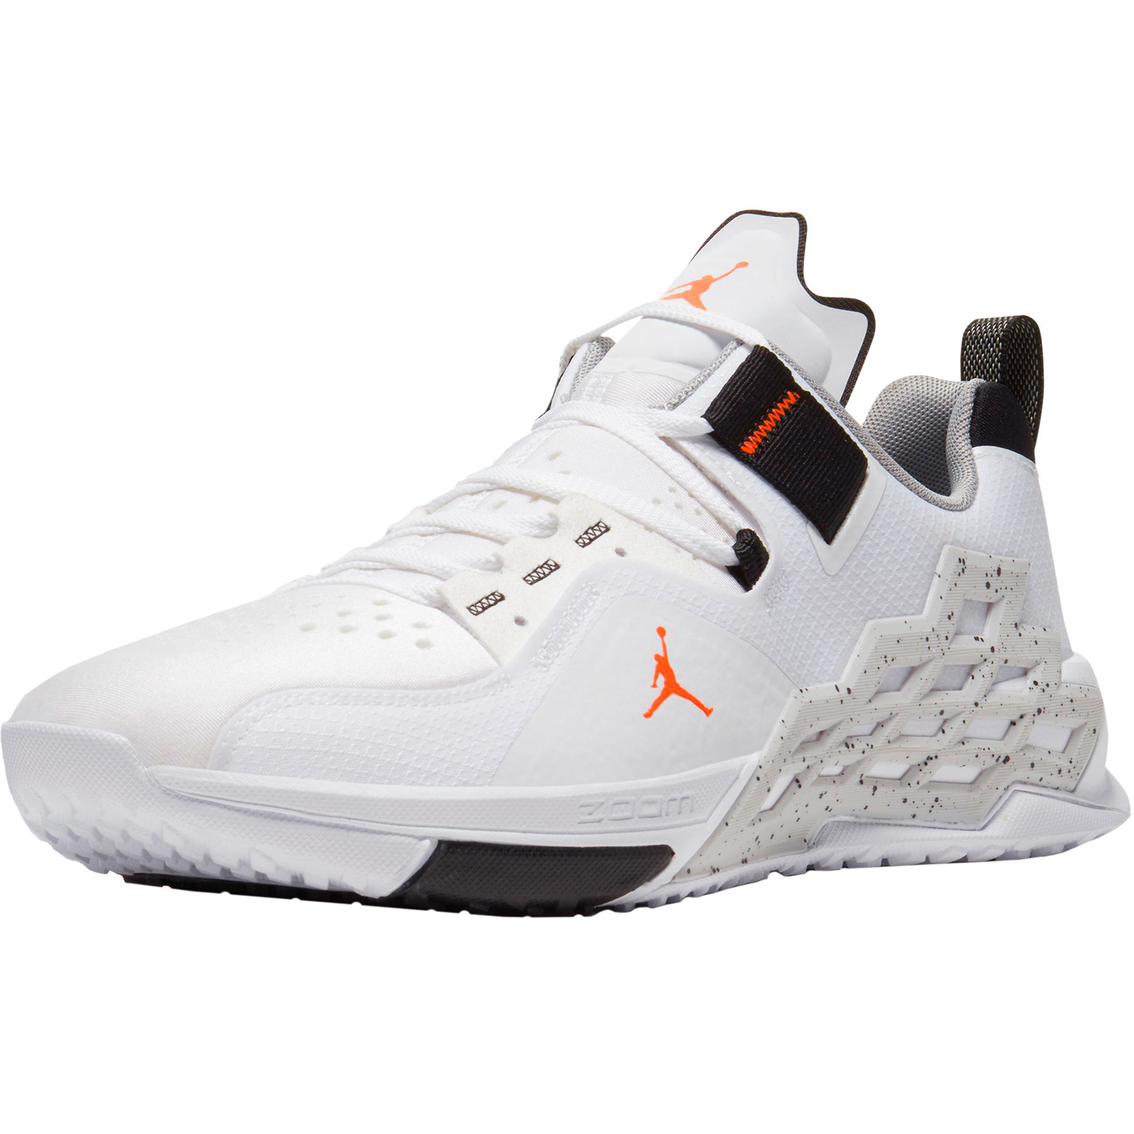 Jordan Alpha Tr 360 Sneakers | Cross 